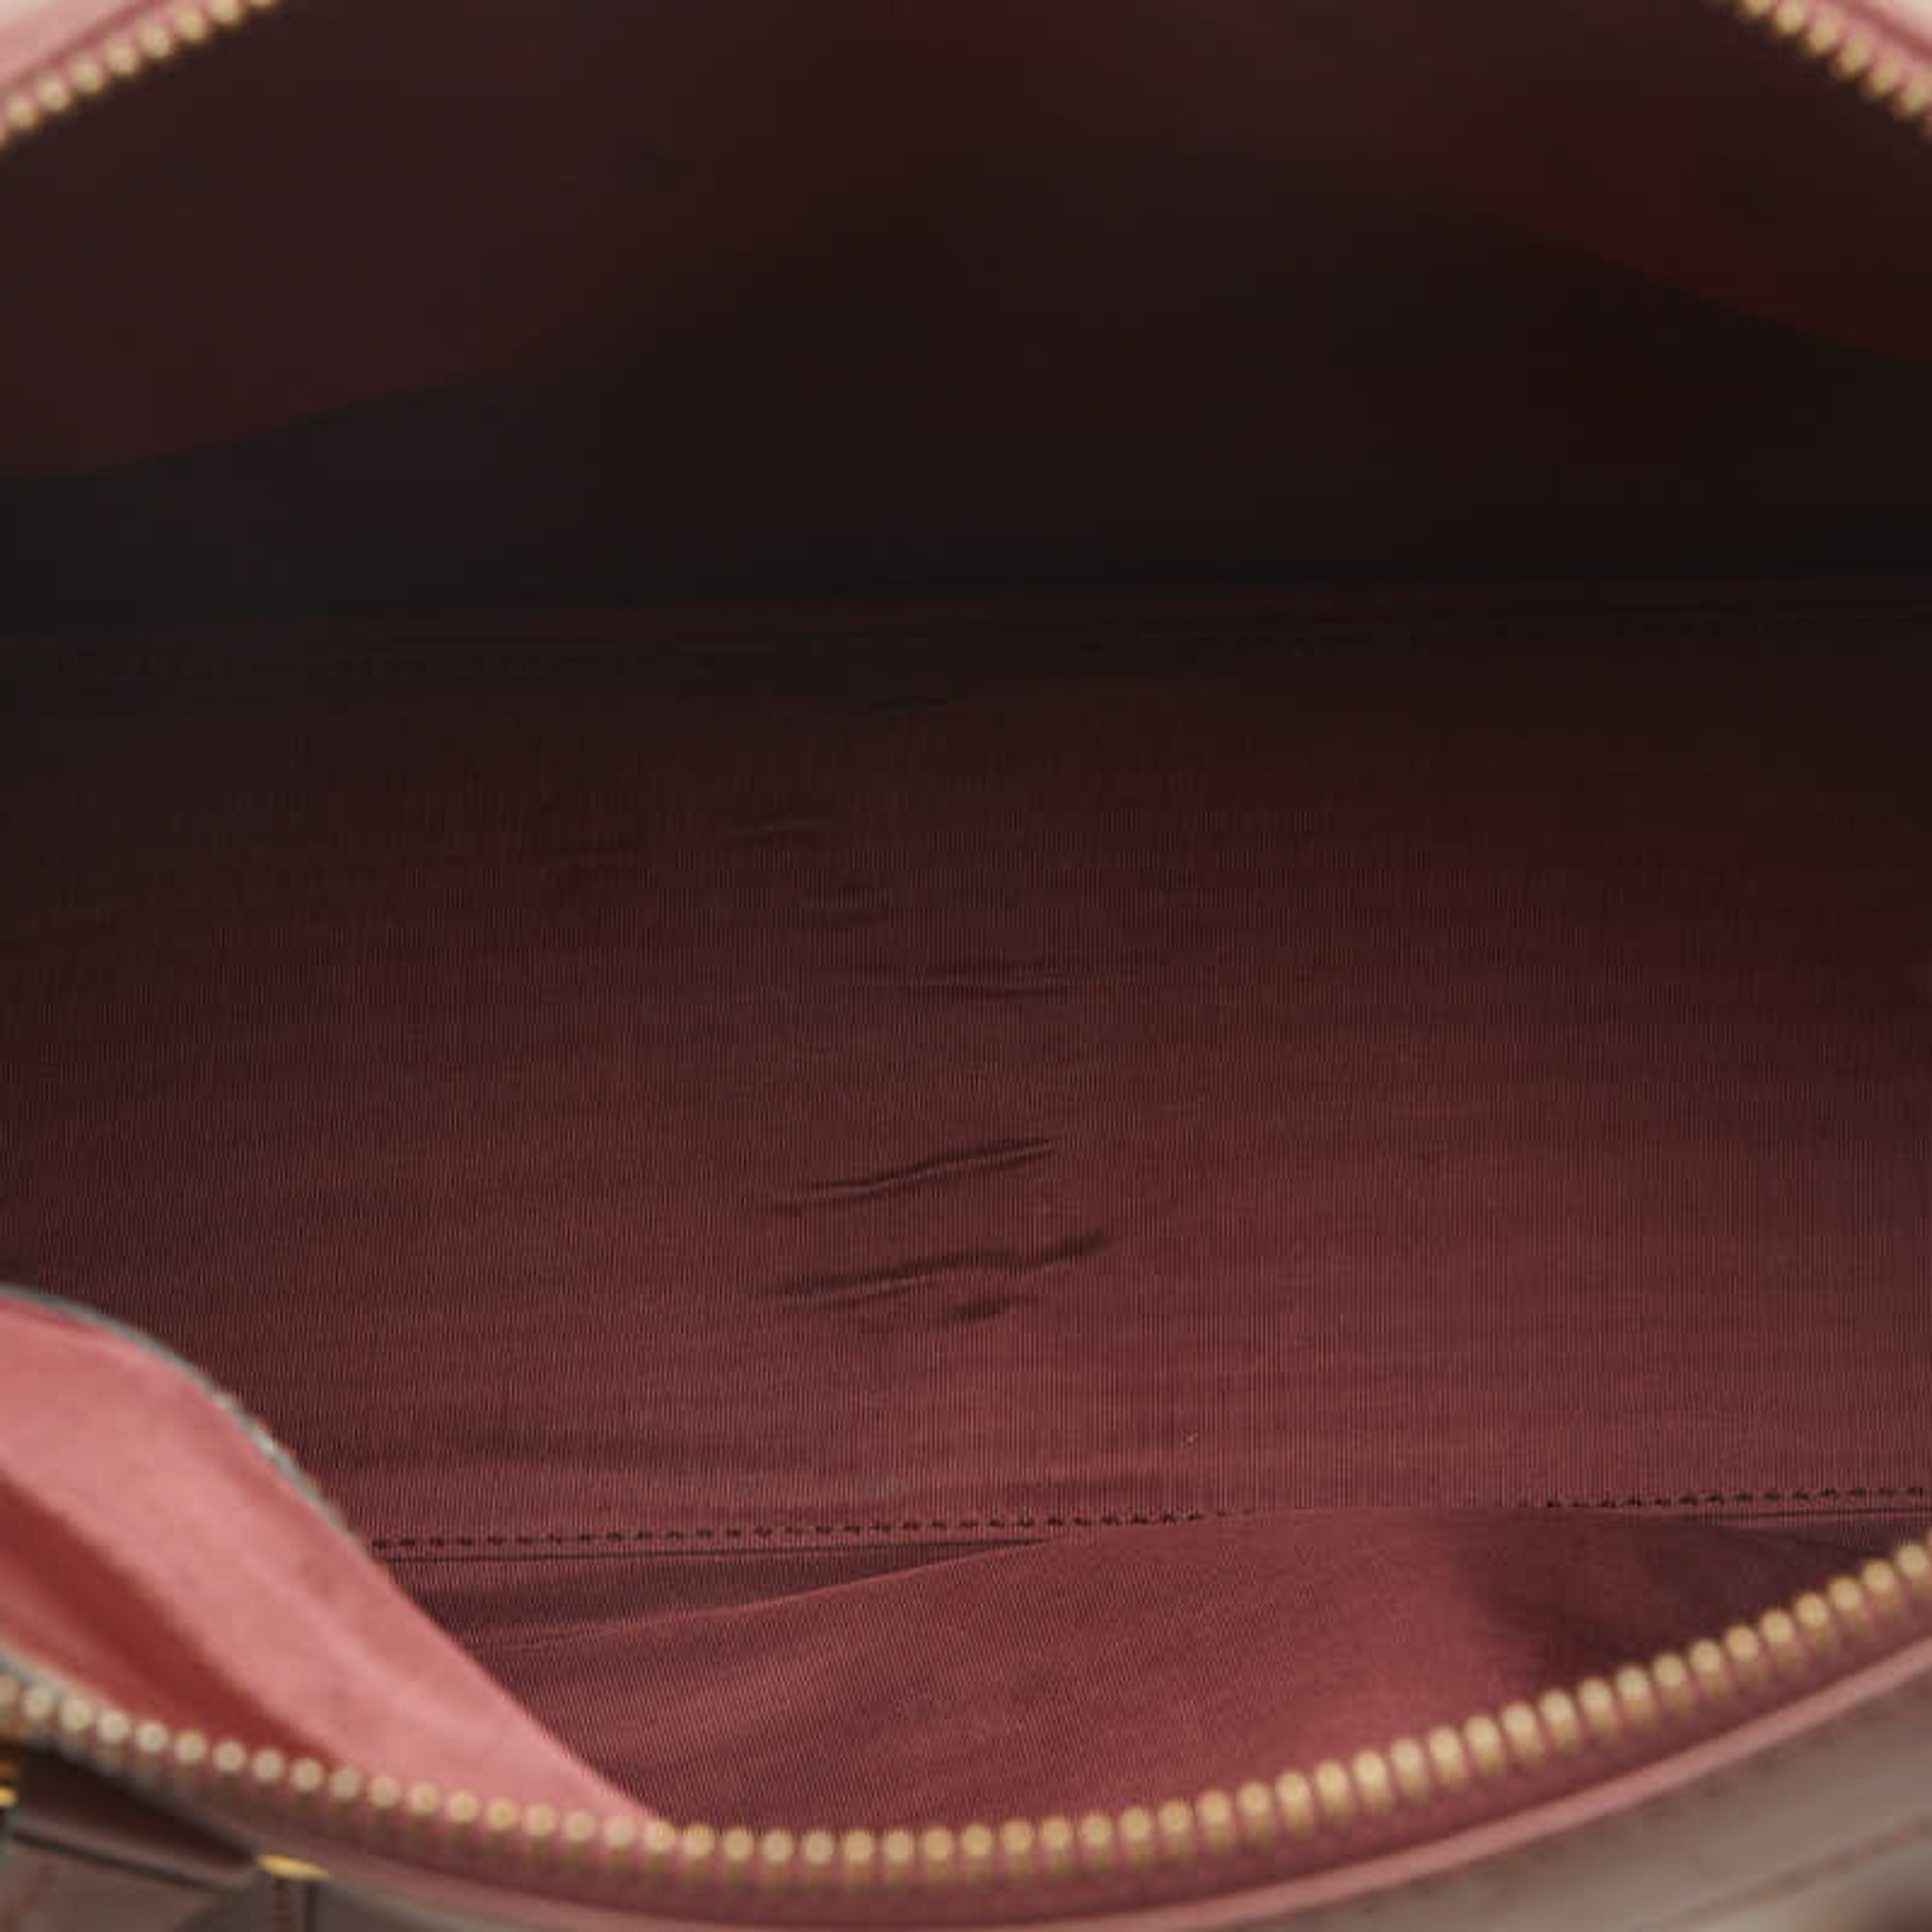 Cartier Must Handbag Boston Bag Wine Red Bordeaux Leather Women's CARTIER